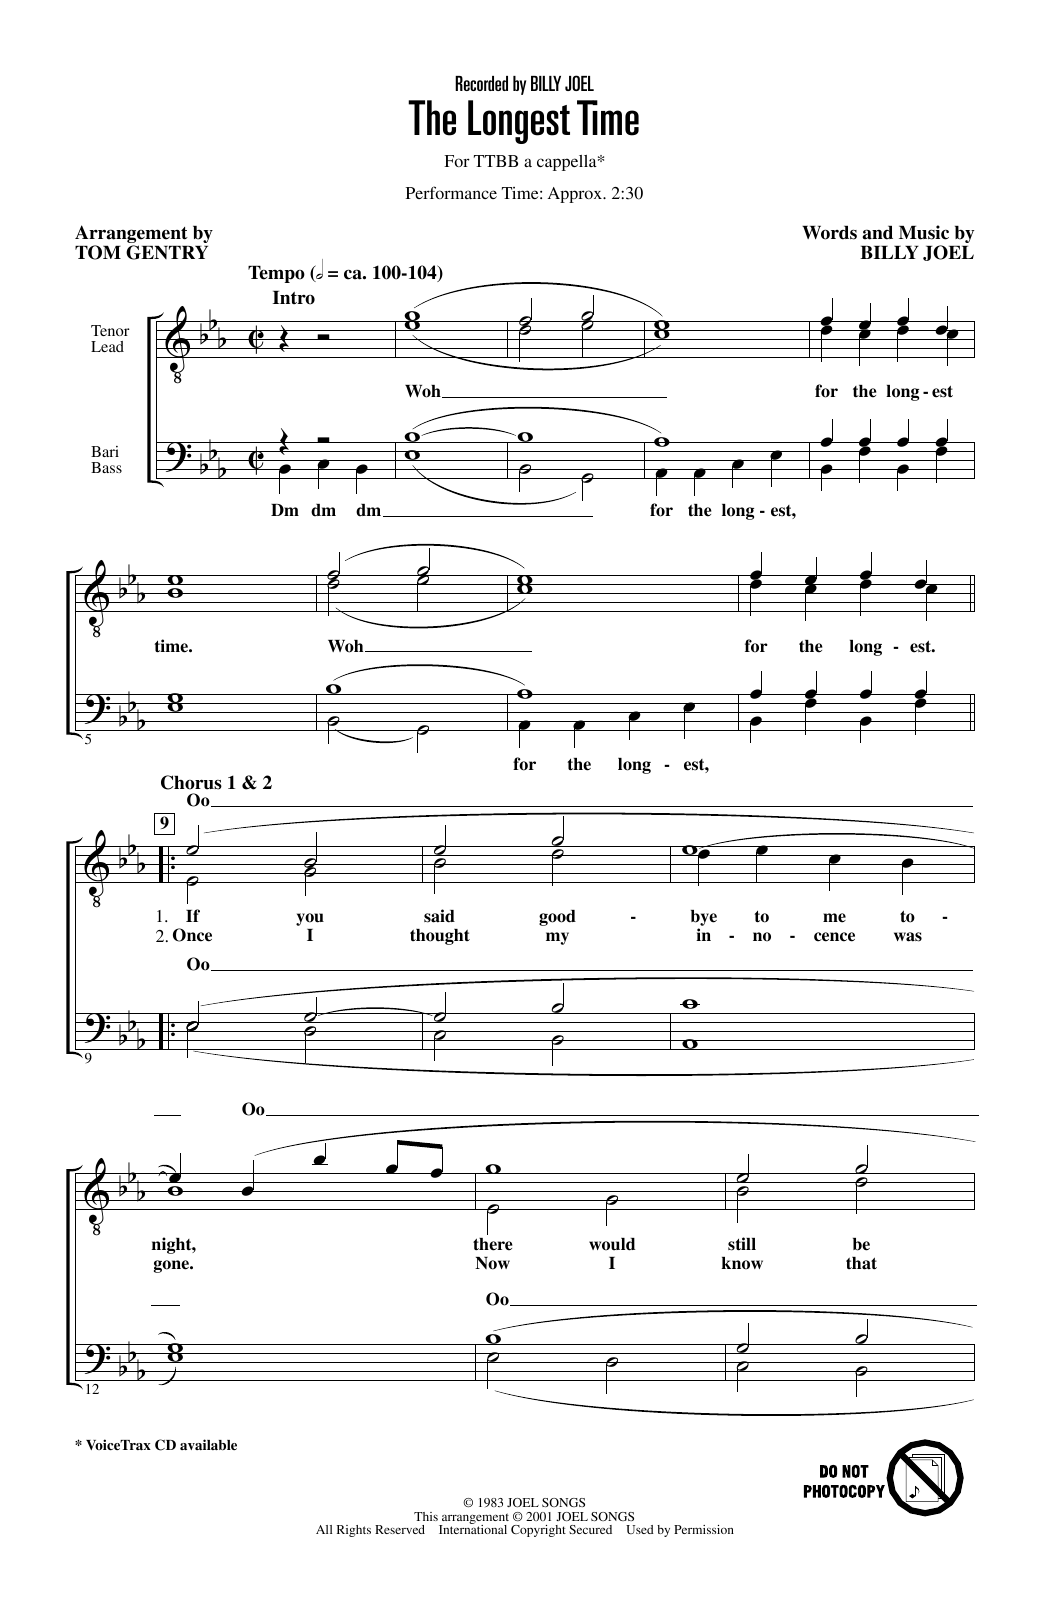 Billy Joel The Longest Time (arr. Tom Gentry) Sheet Music Notes & Chords for TTBB Choir - Download or Print PDF